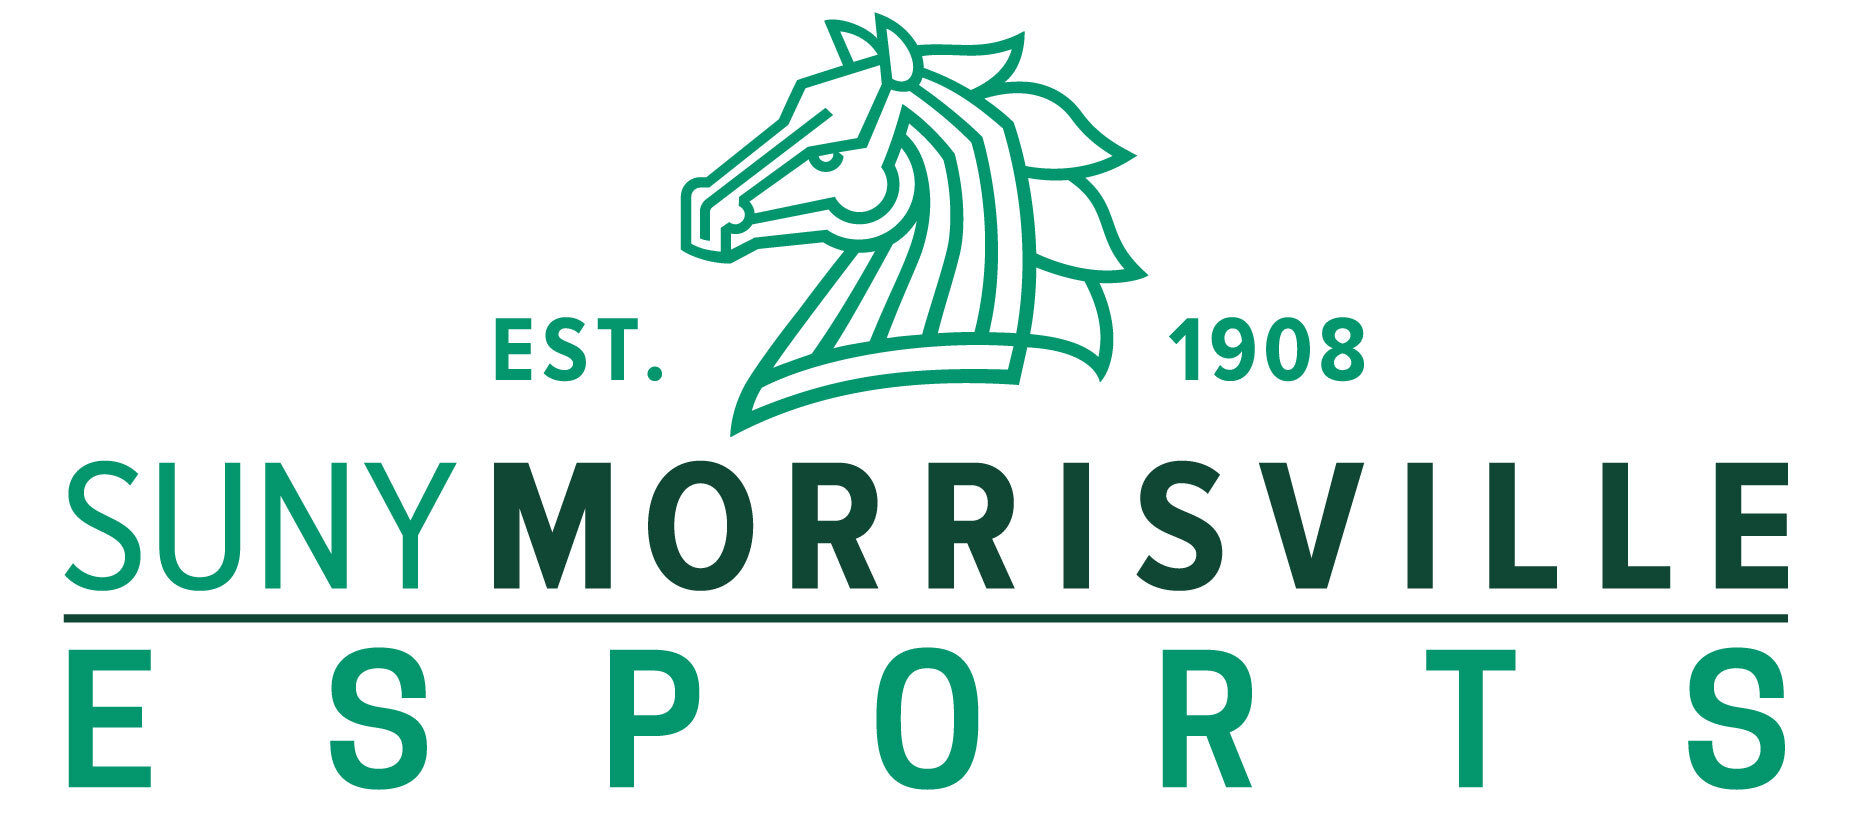 SUNY Morrisville Esports Banner